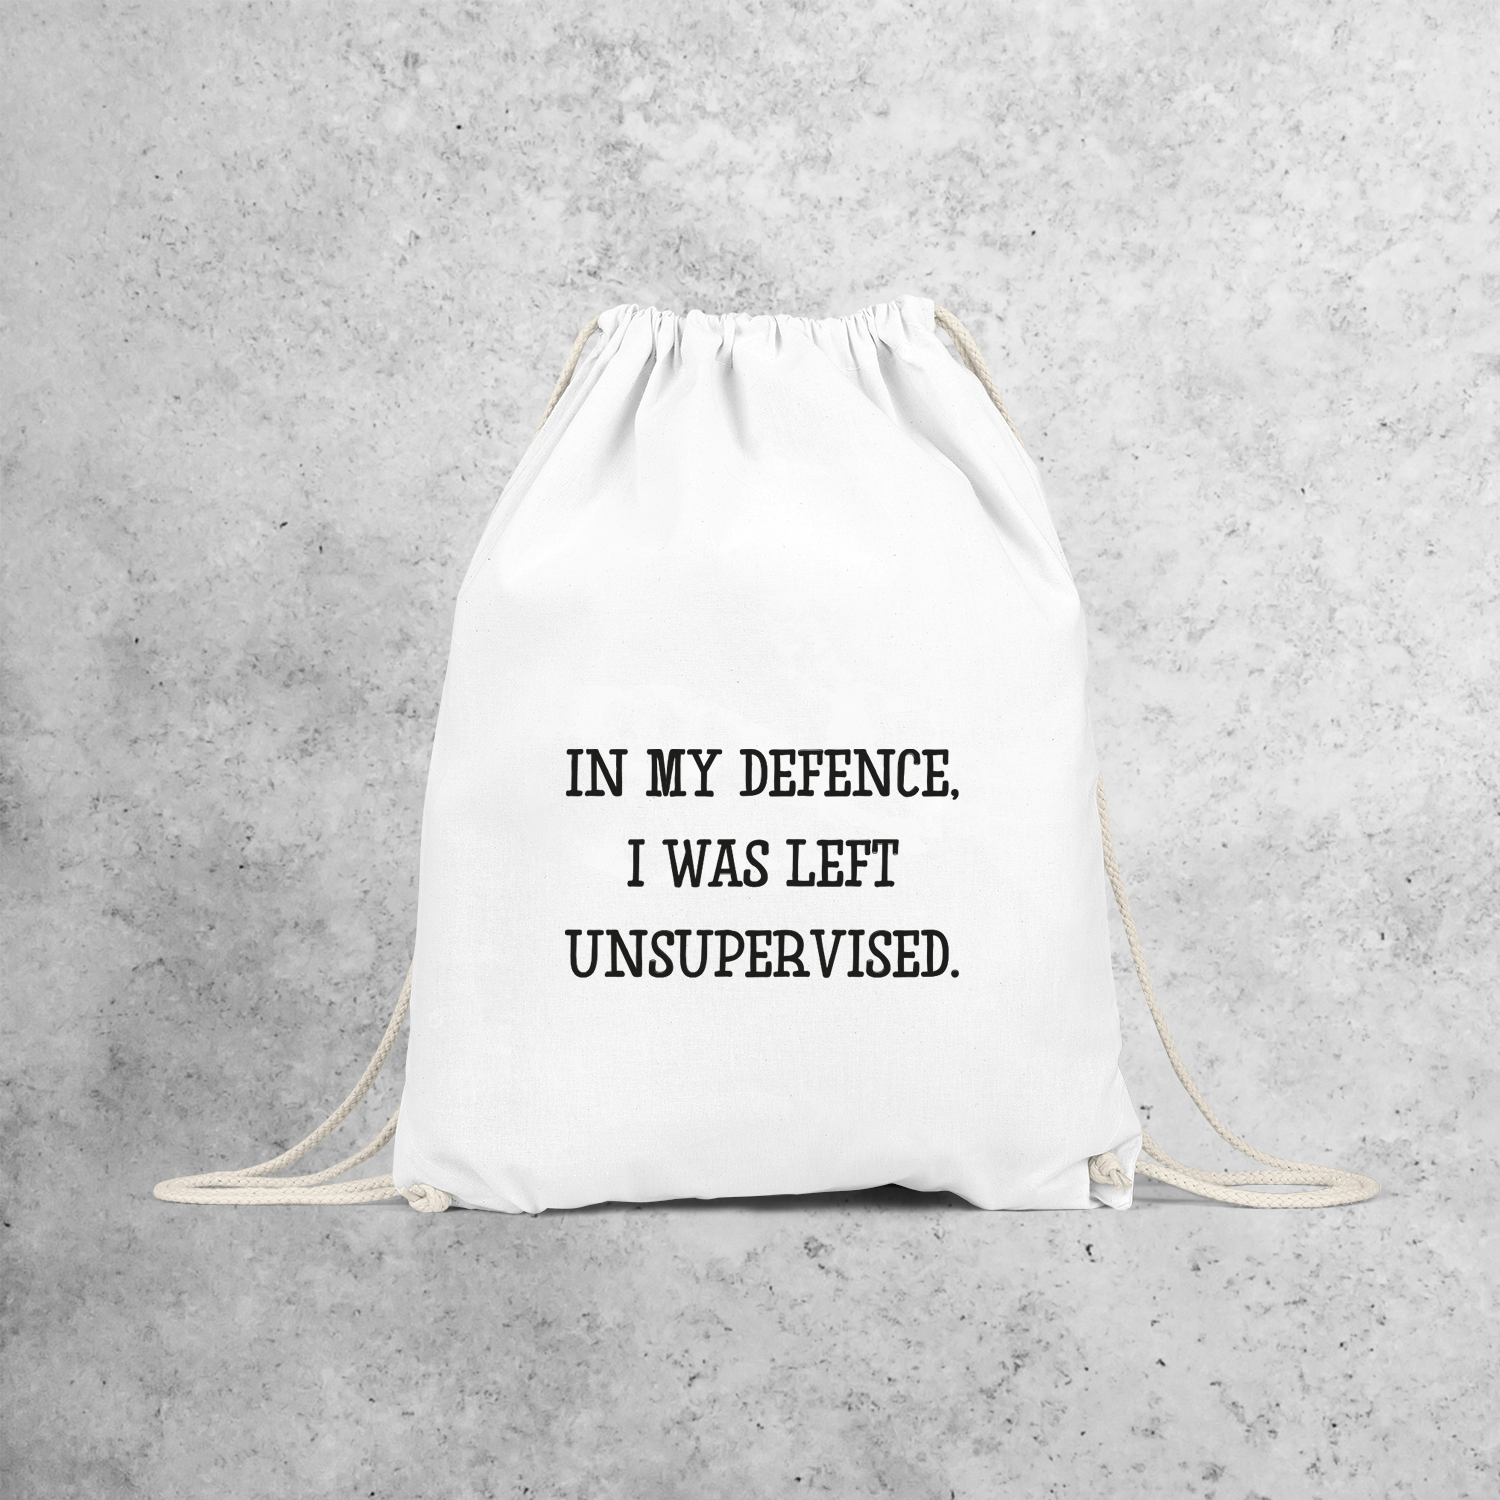 'In my defence, I was left unsupervised' backpack